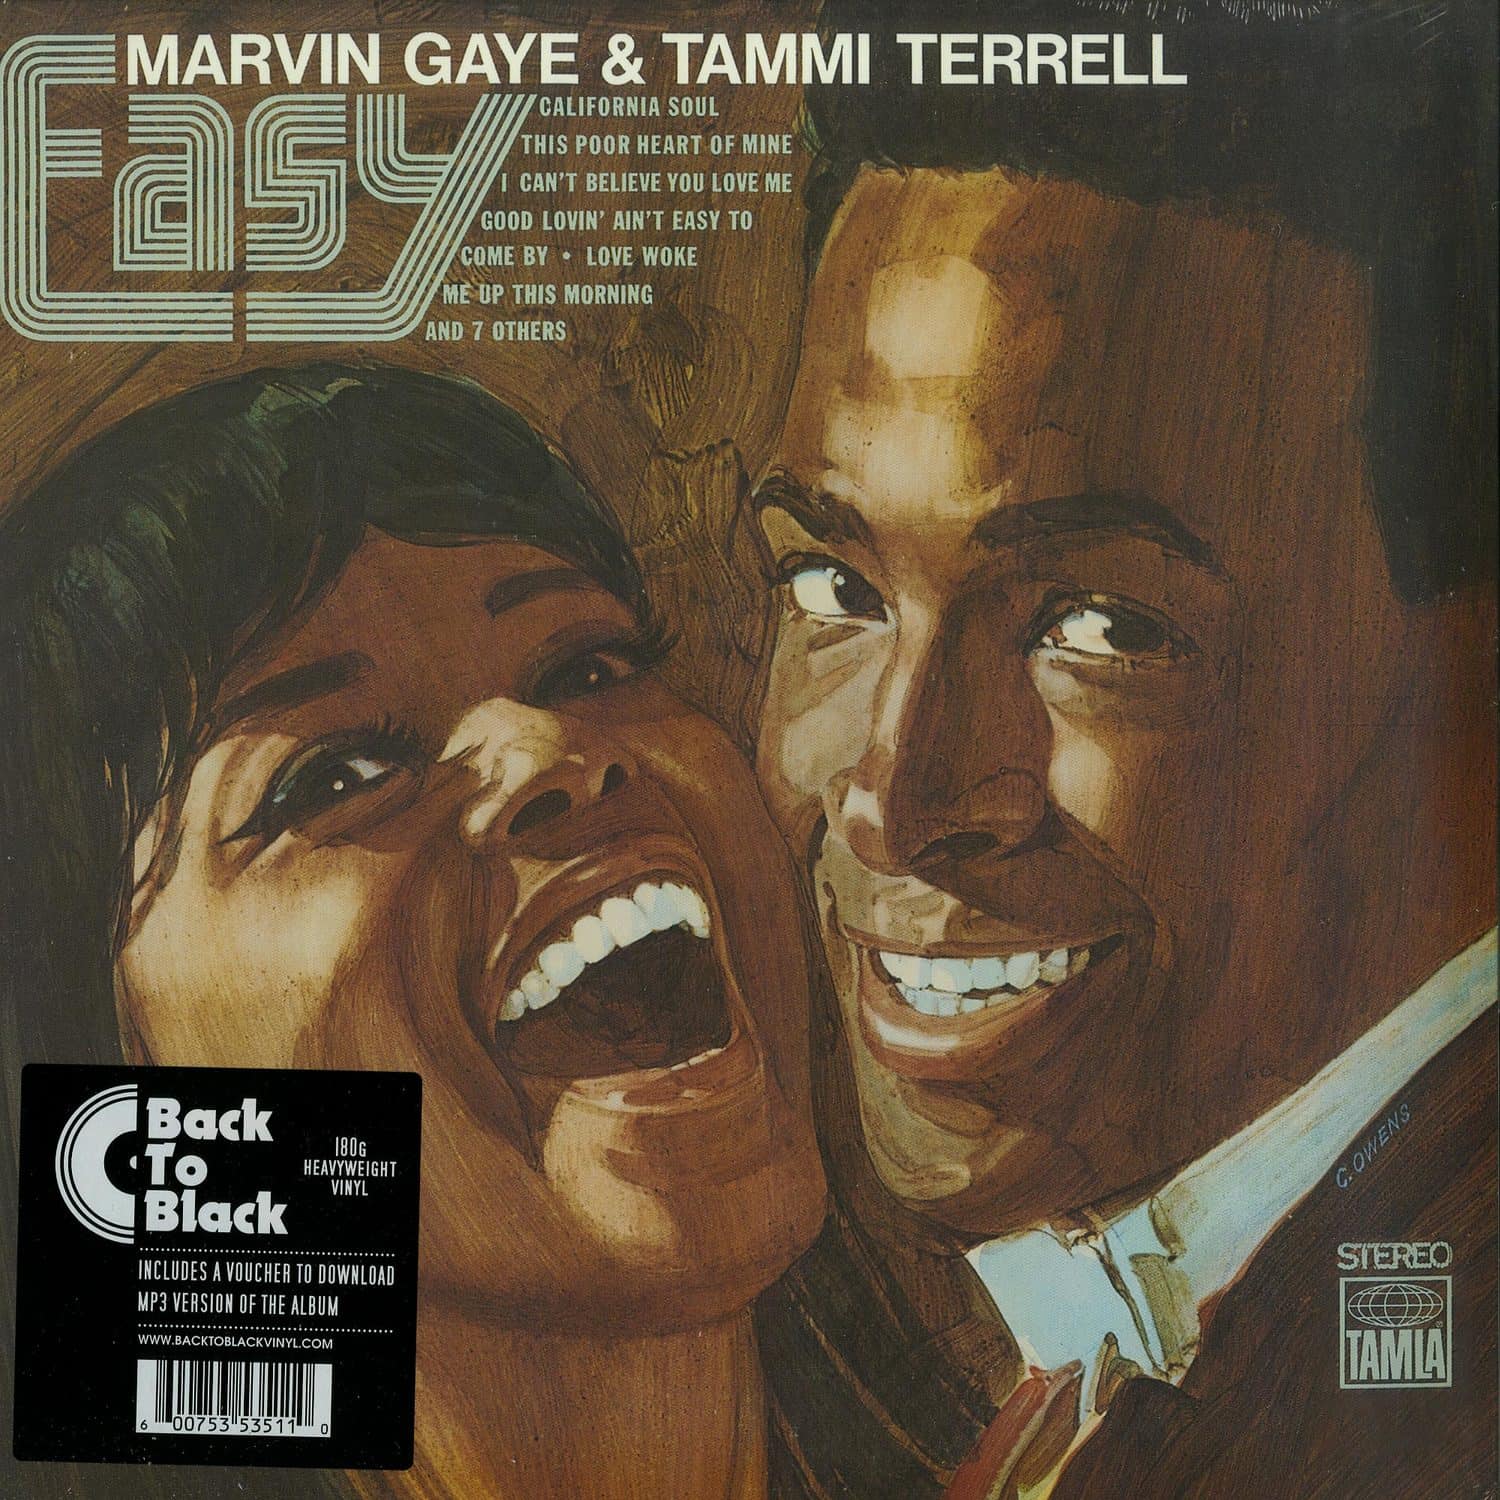 Marvin Gaye & Tammi Terrell - EASY 